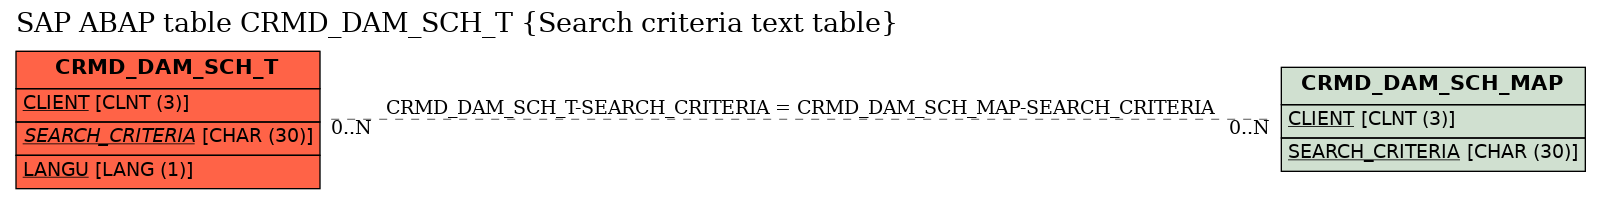 E-R Diagram for table CRMD_DAM_SCH_T (Search criteria text table)